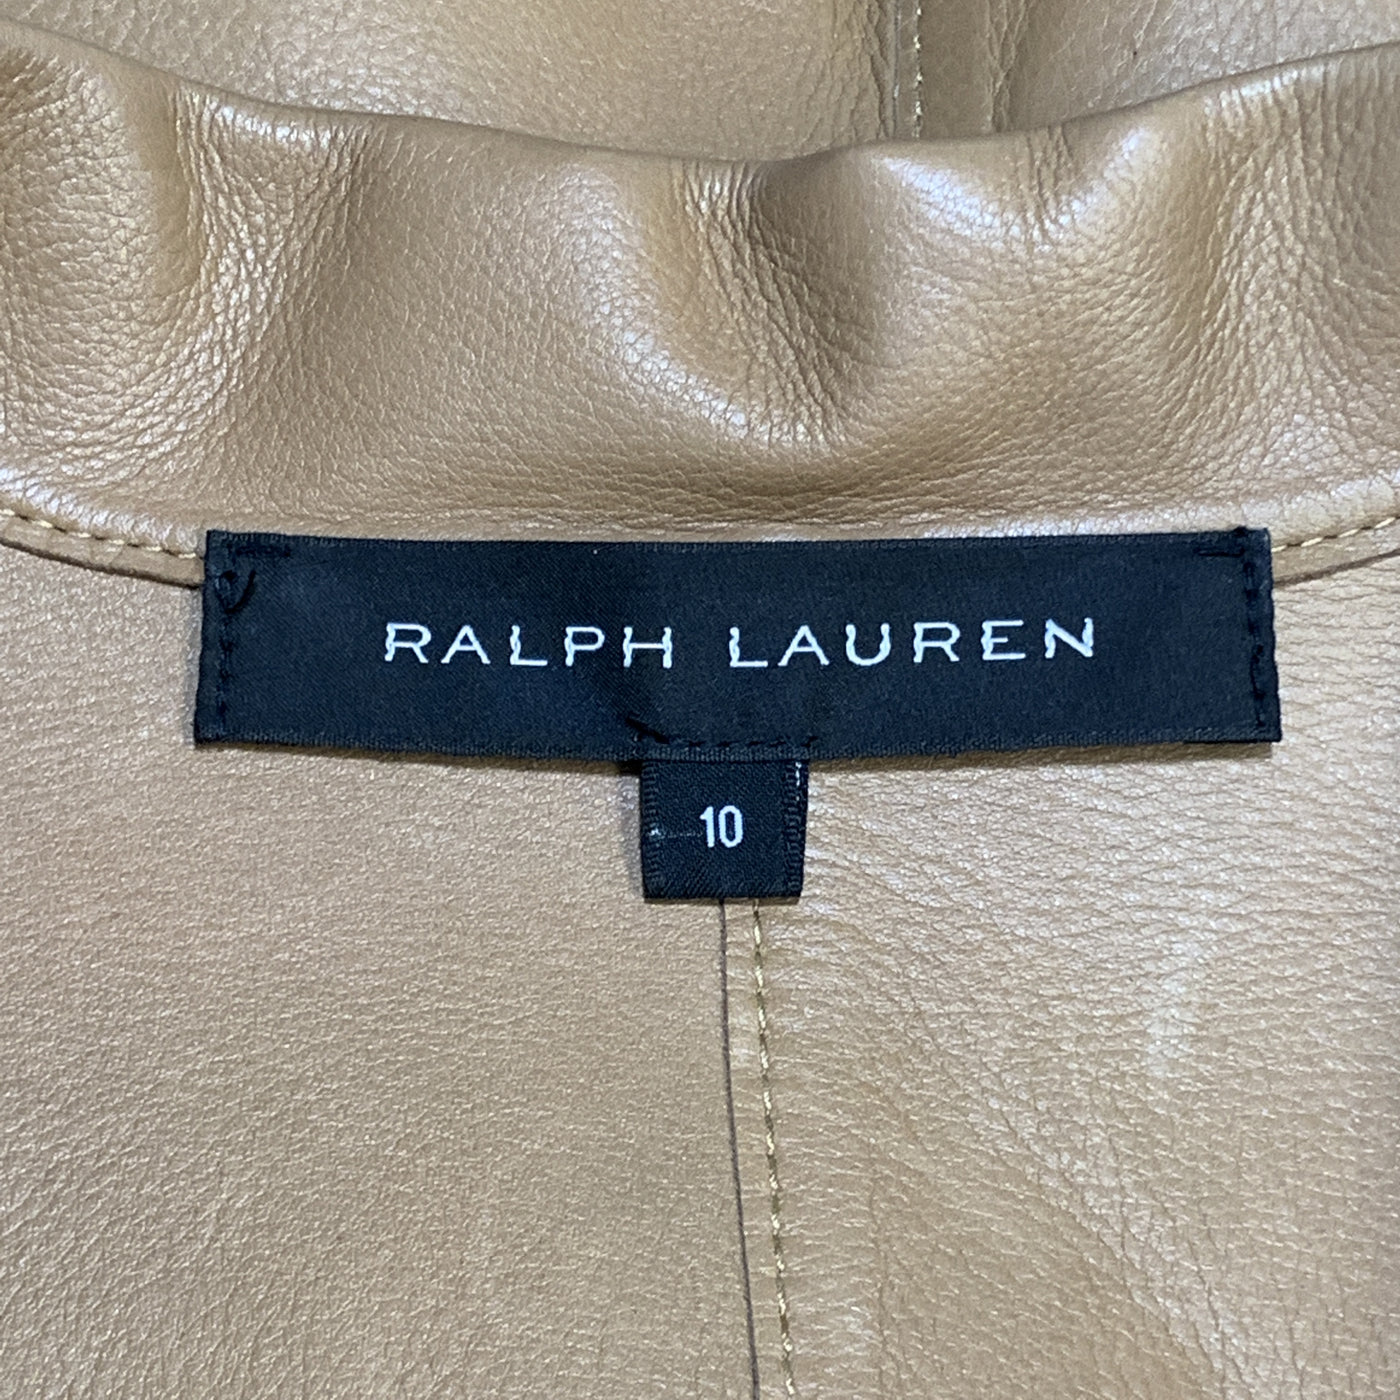 RALPH LAUREN Size 10 Tan Calf Leather Blazer